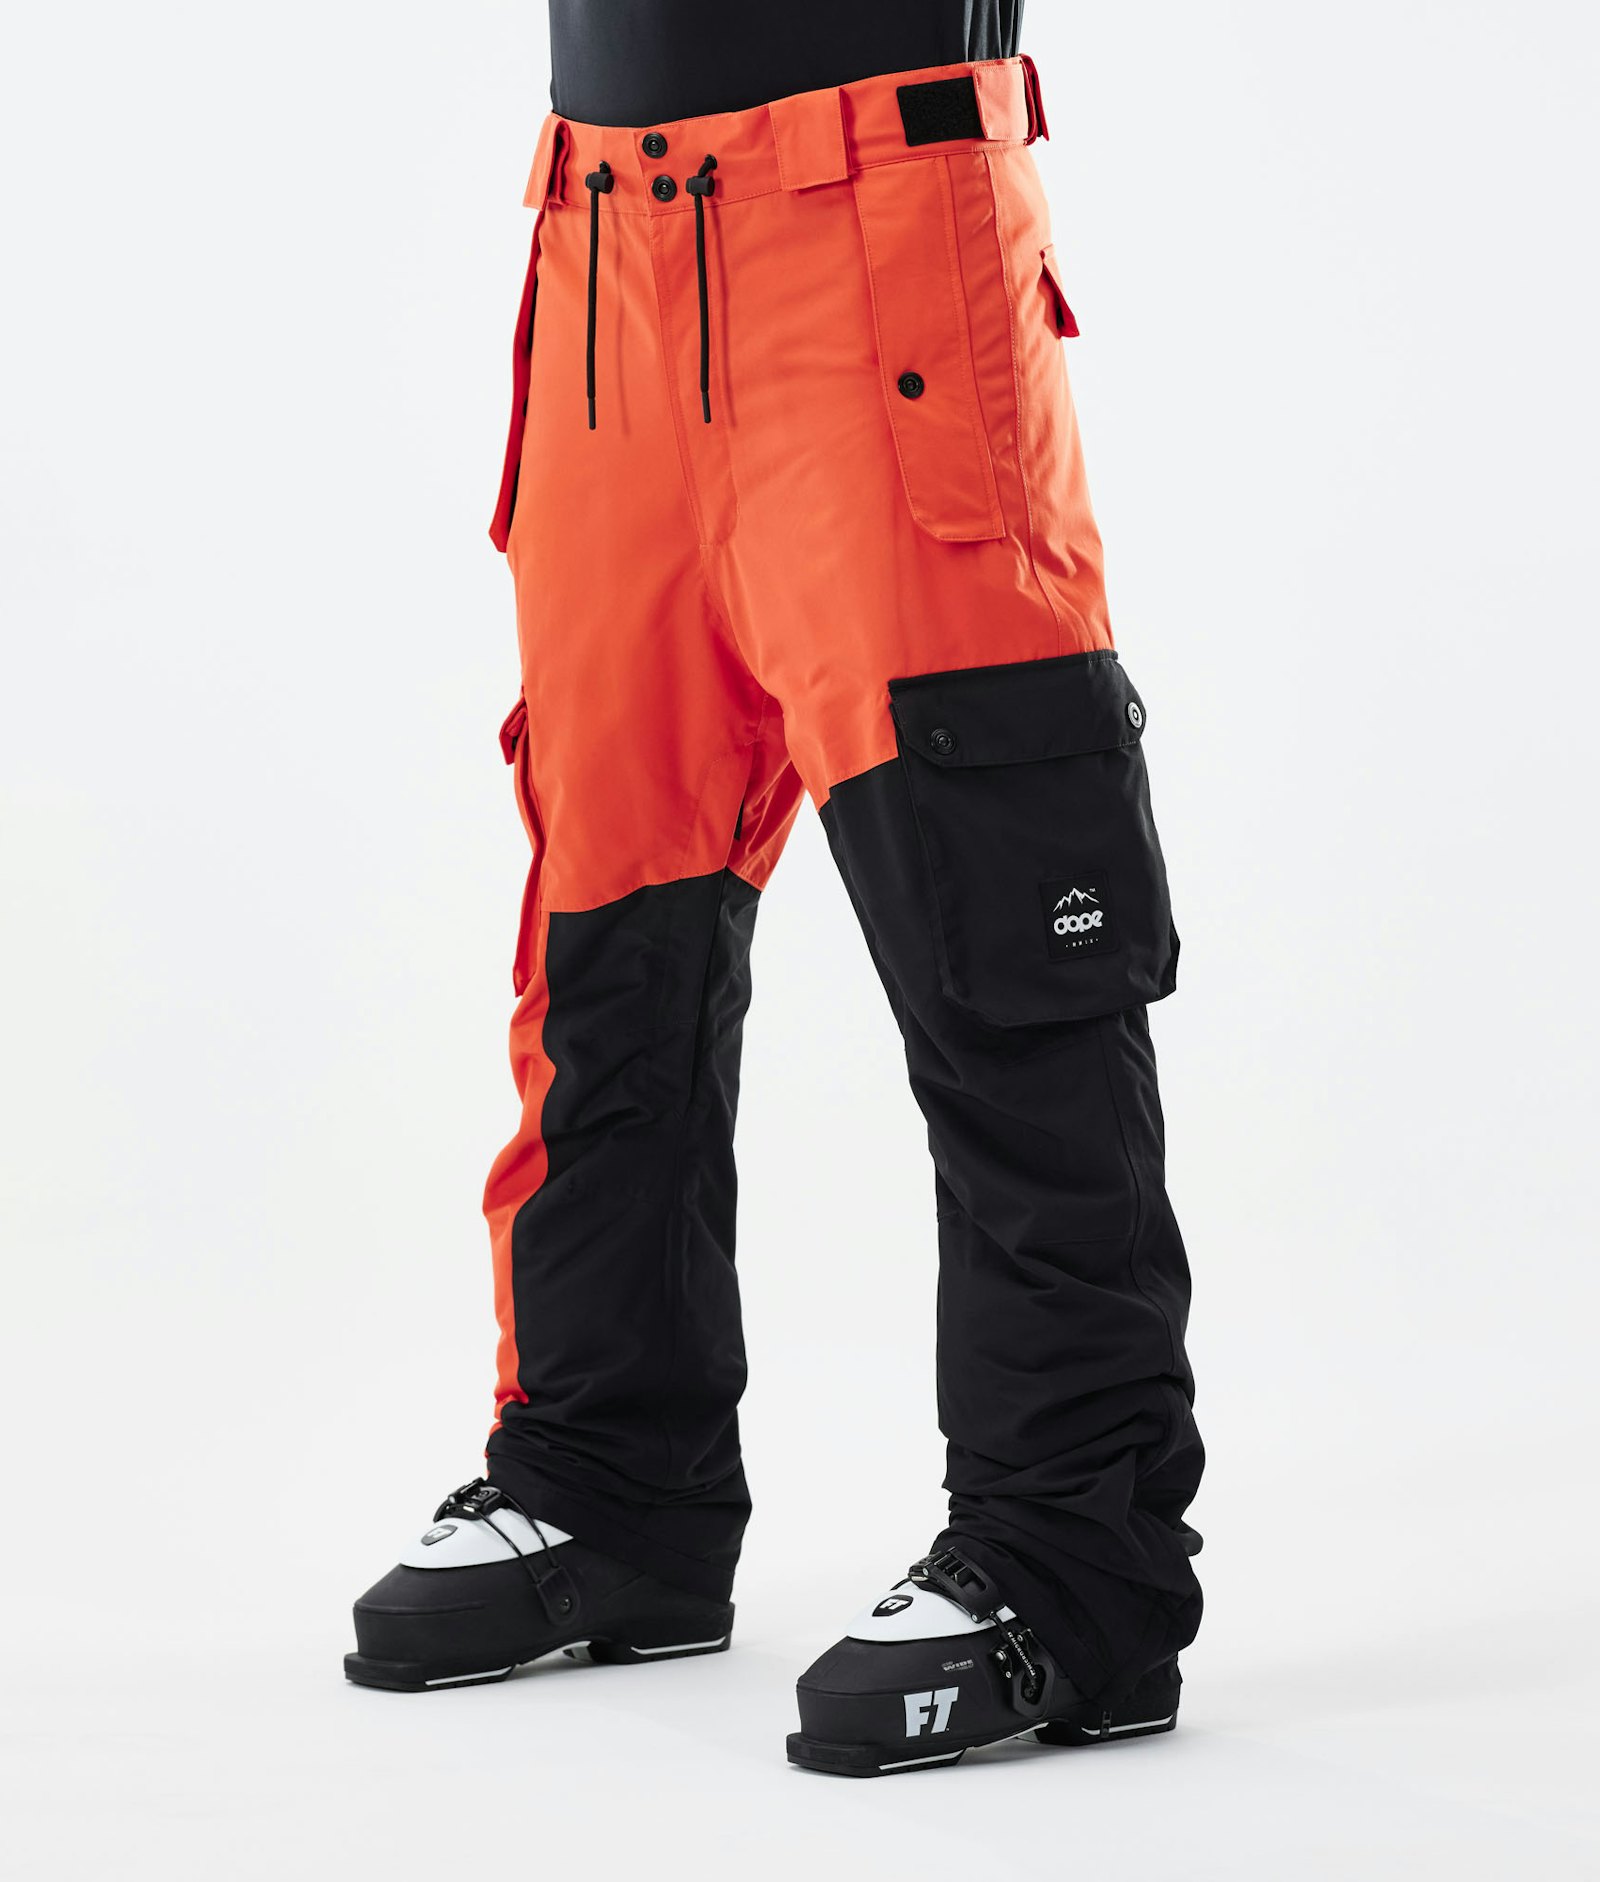 Adept 2021 Pantaloni Sci Uomo Orange/Black